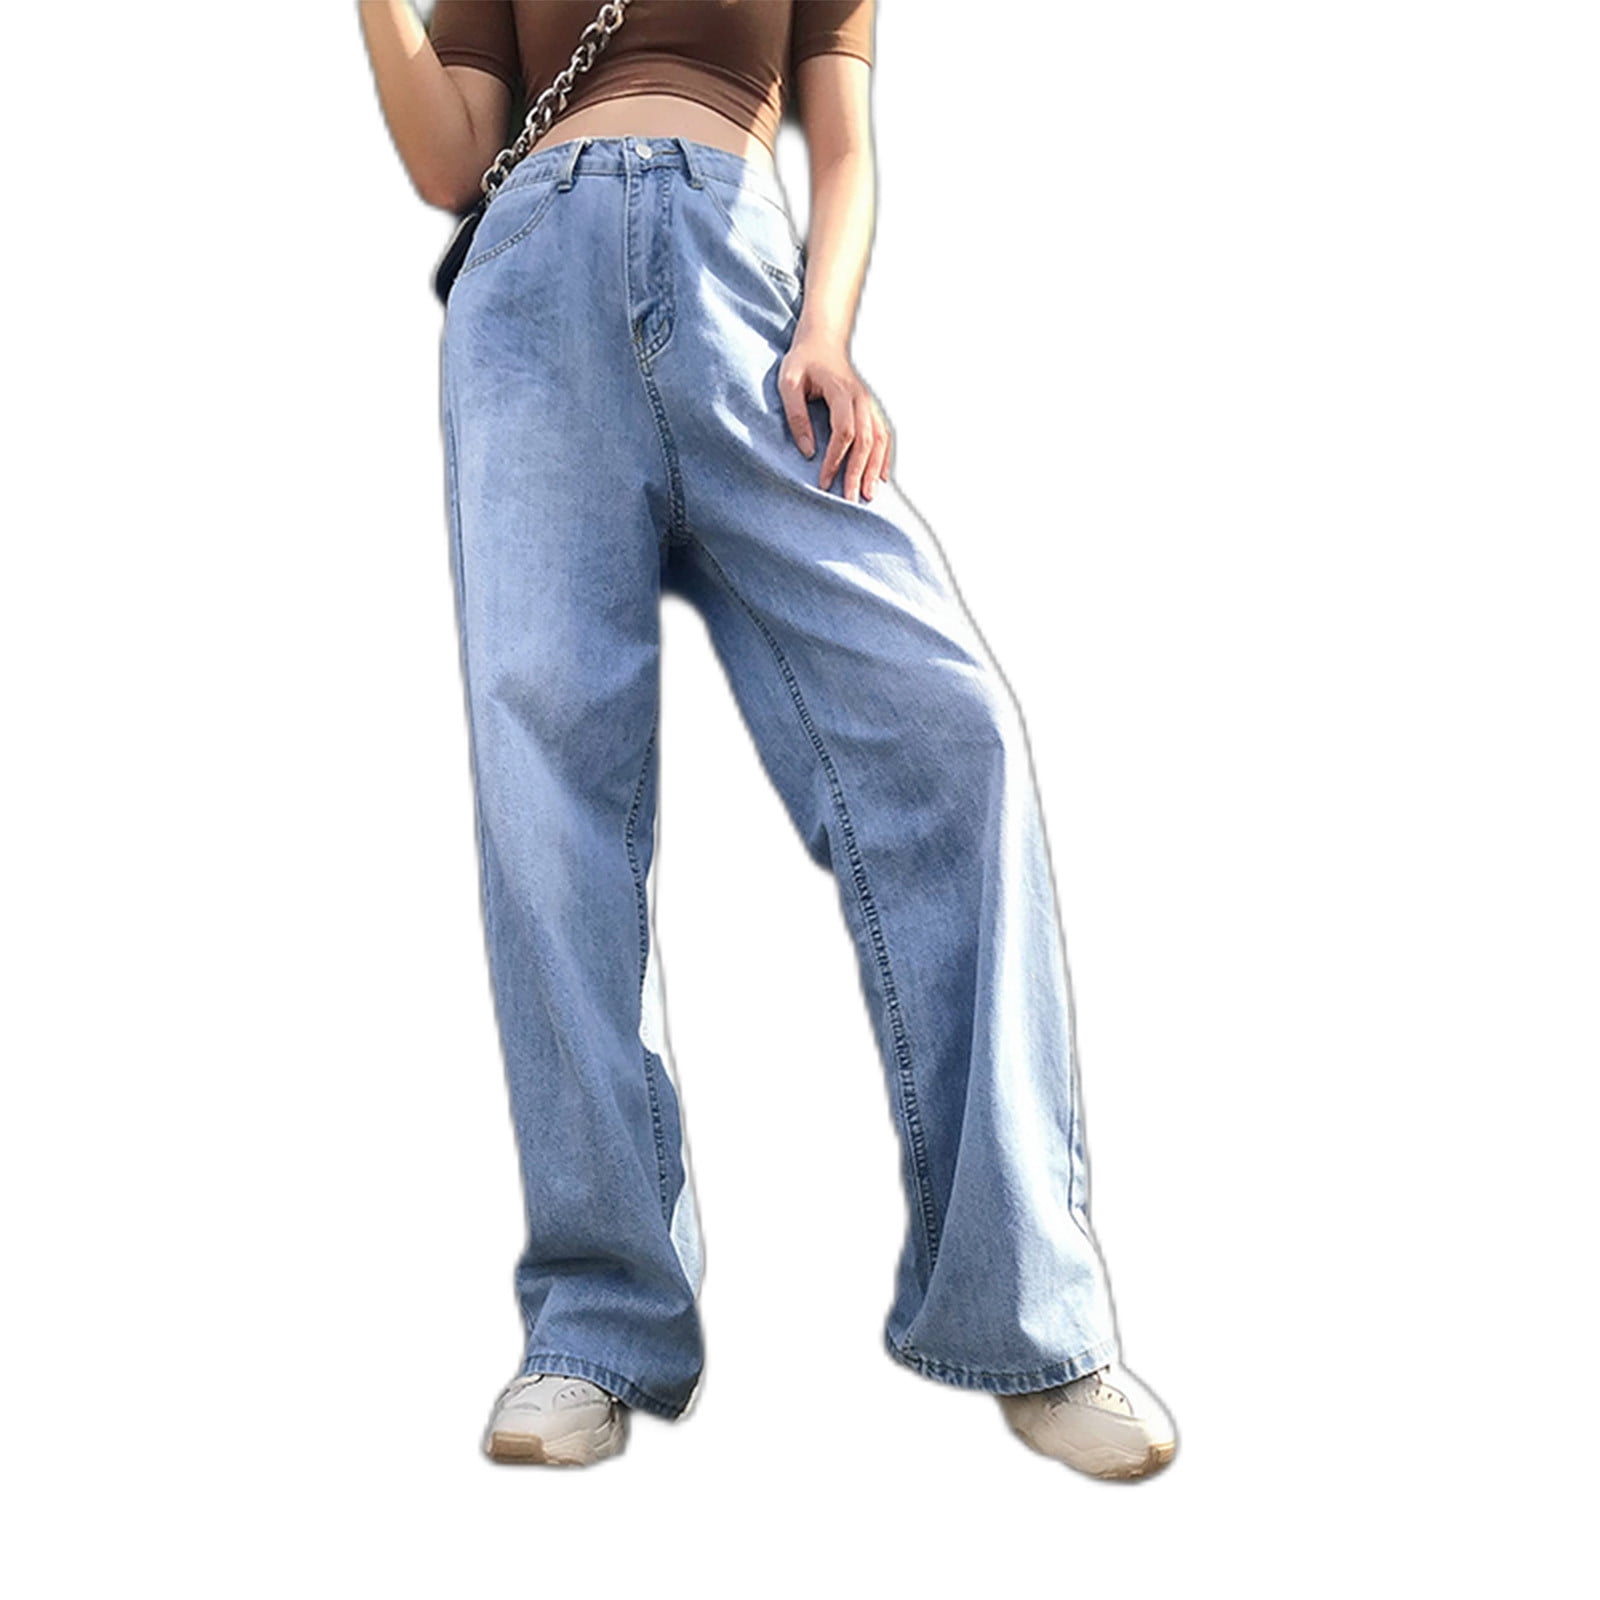 zuwimk Jeans For Women,Women's Pull-on Extra Stretch Denim Jean Blue,XL 